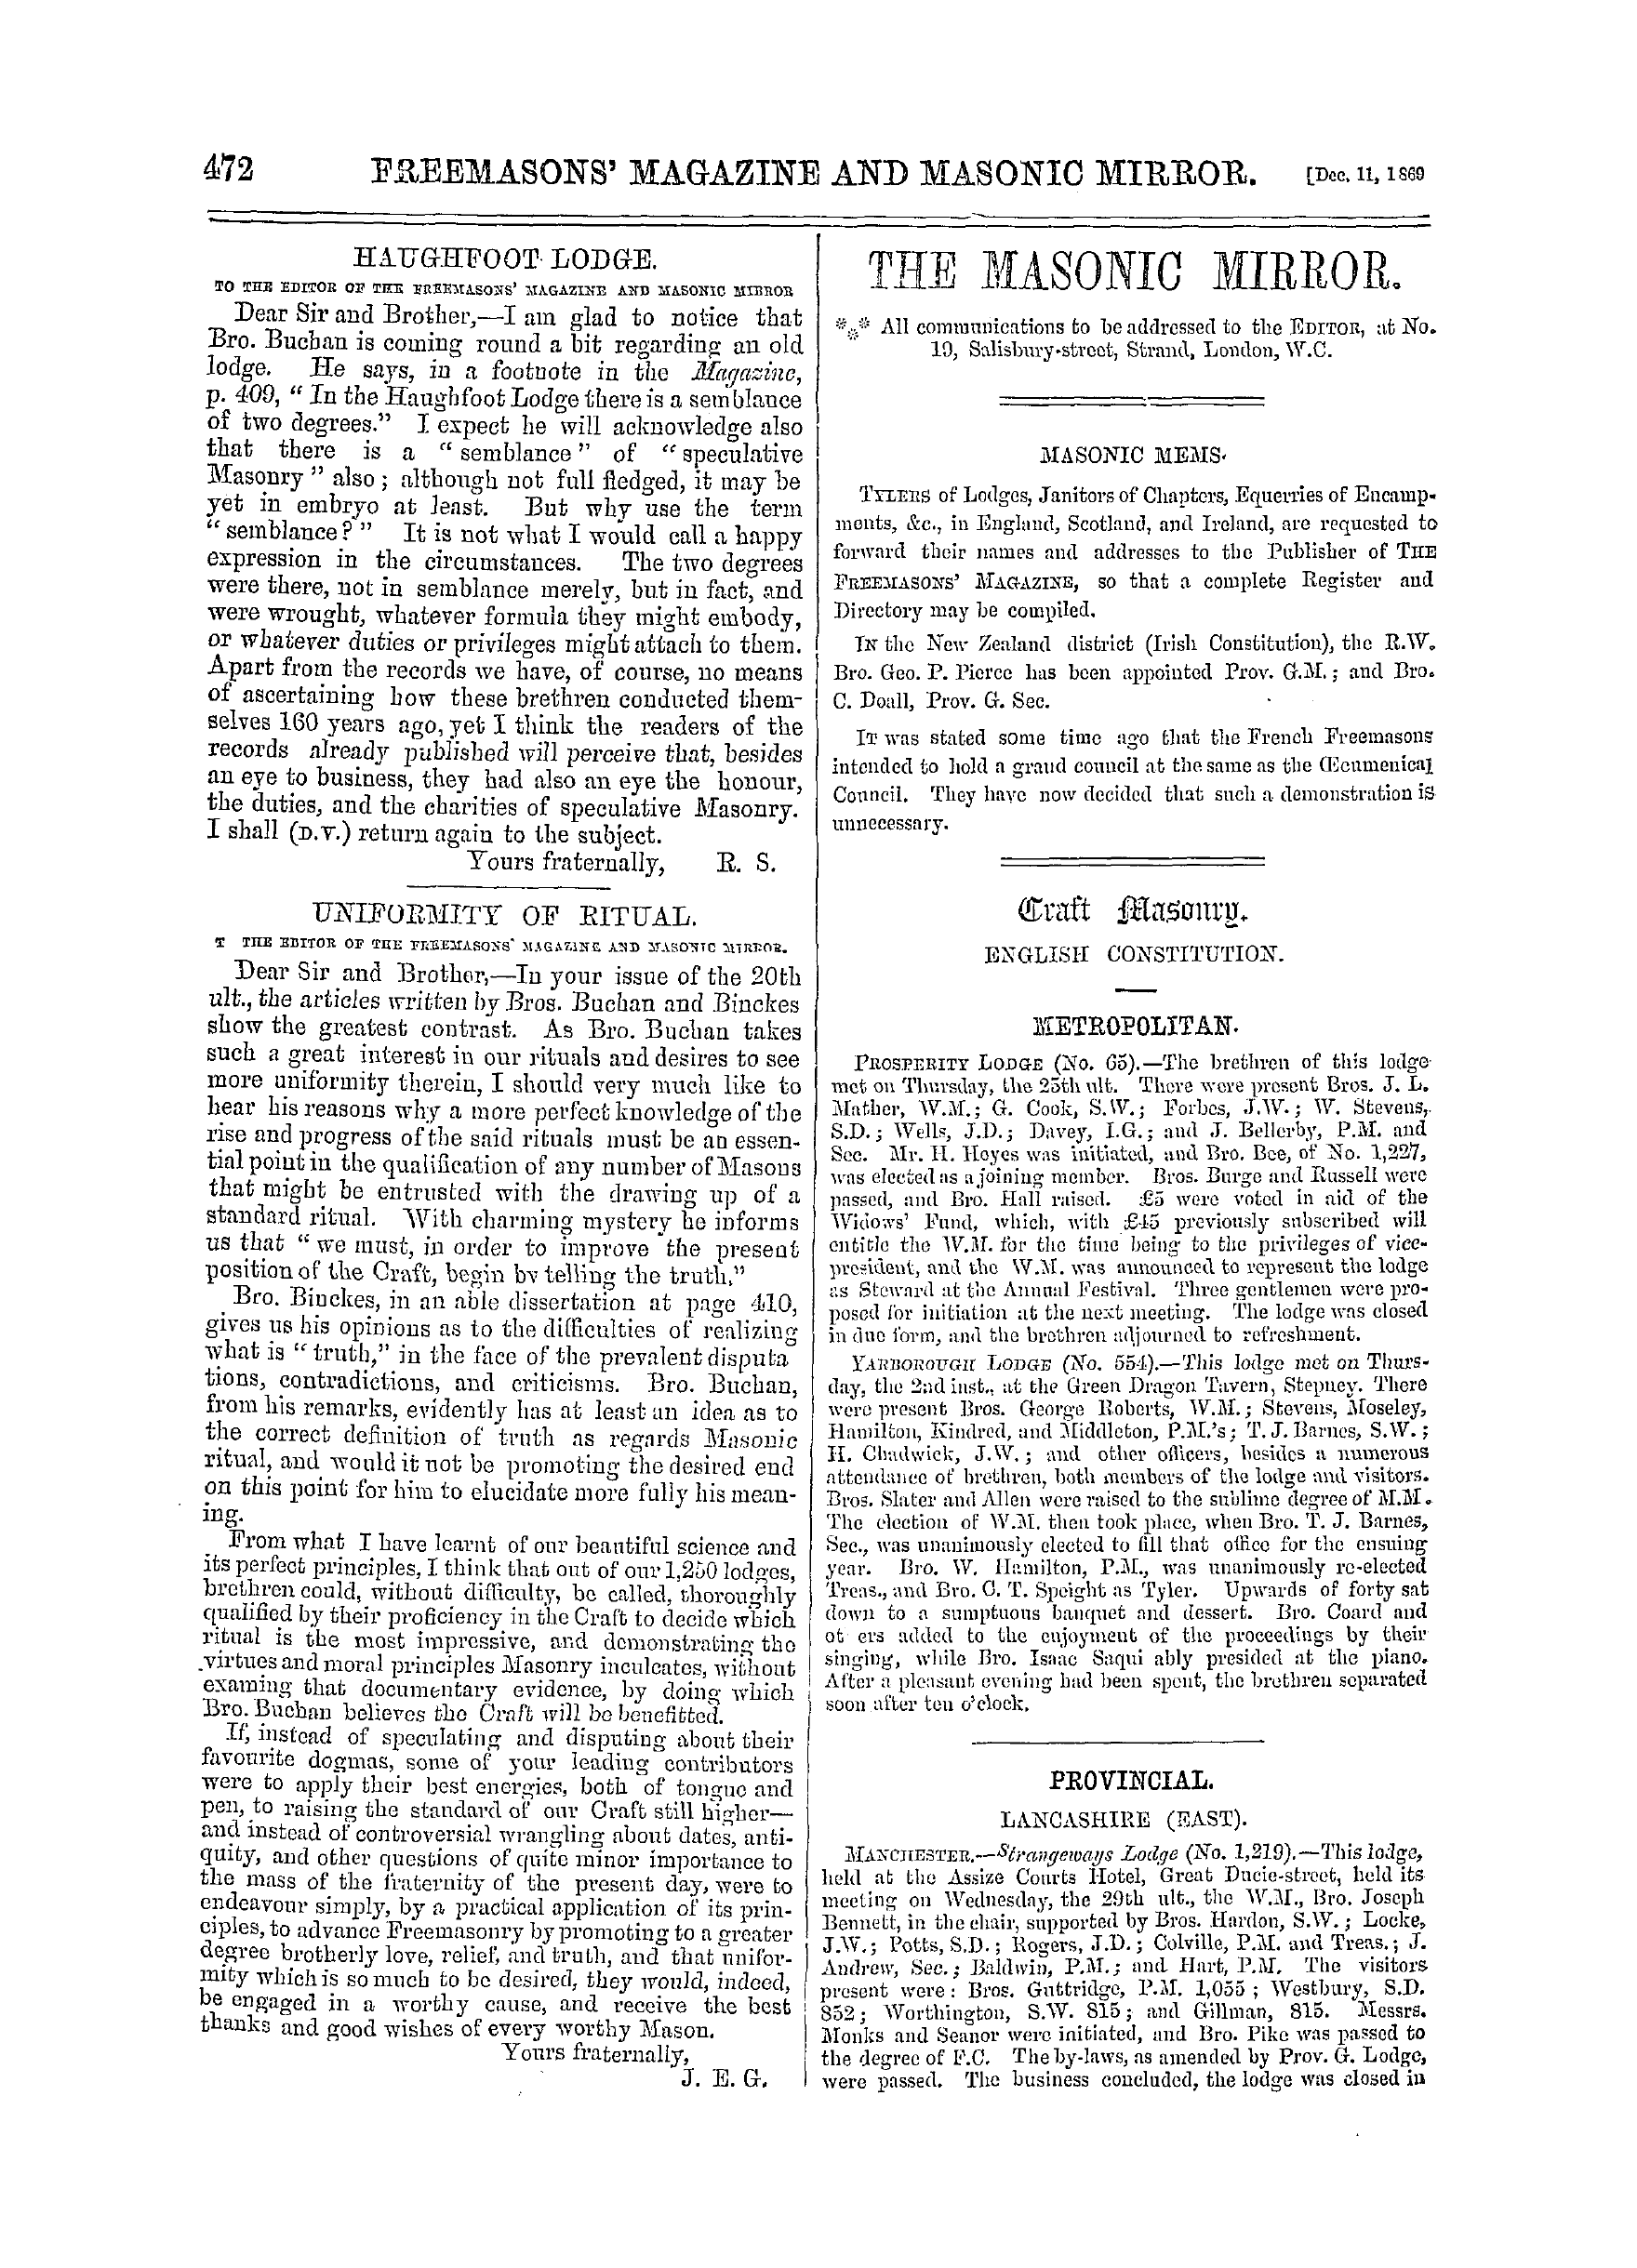 The Freemasons' Monthly Magazine: 1869-12-11 - Provincial.